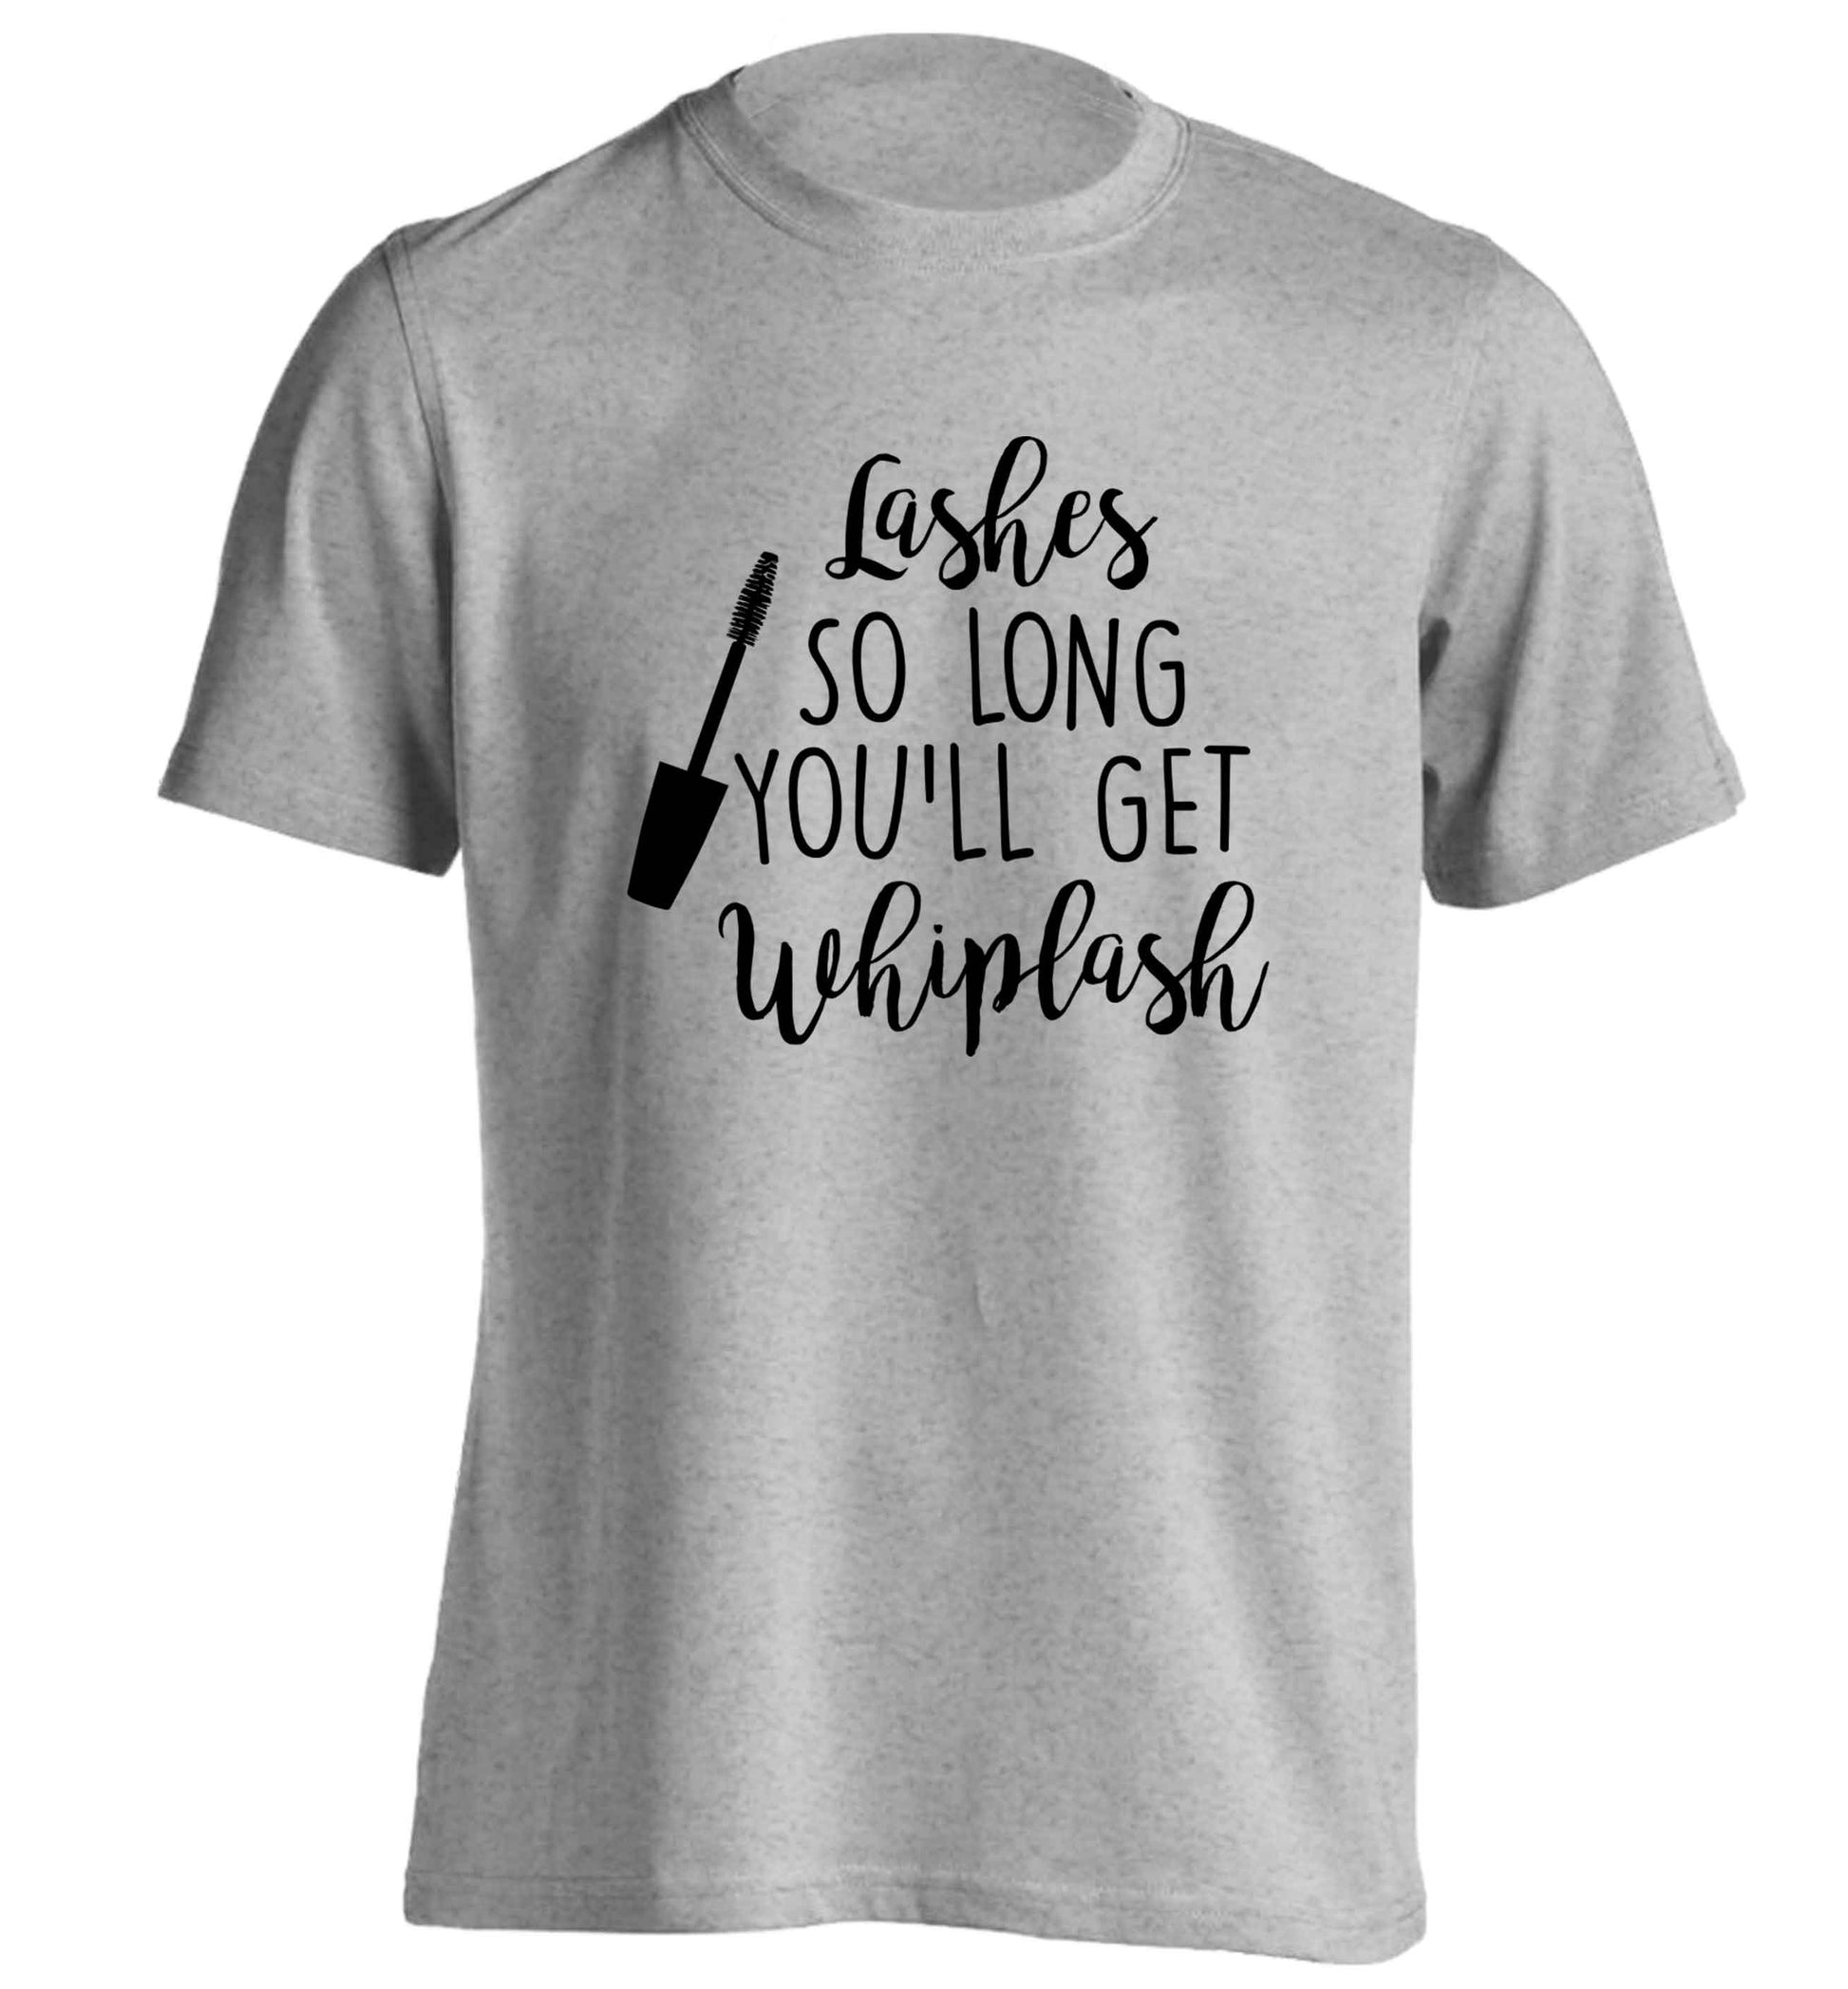 Lashes so long you'll get whiplash adults unisex grey Tshirt 2XL